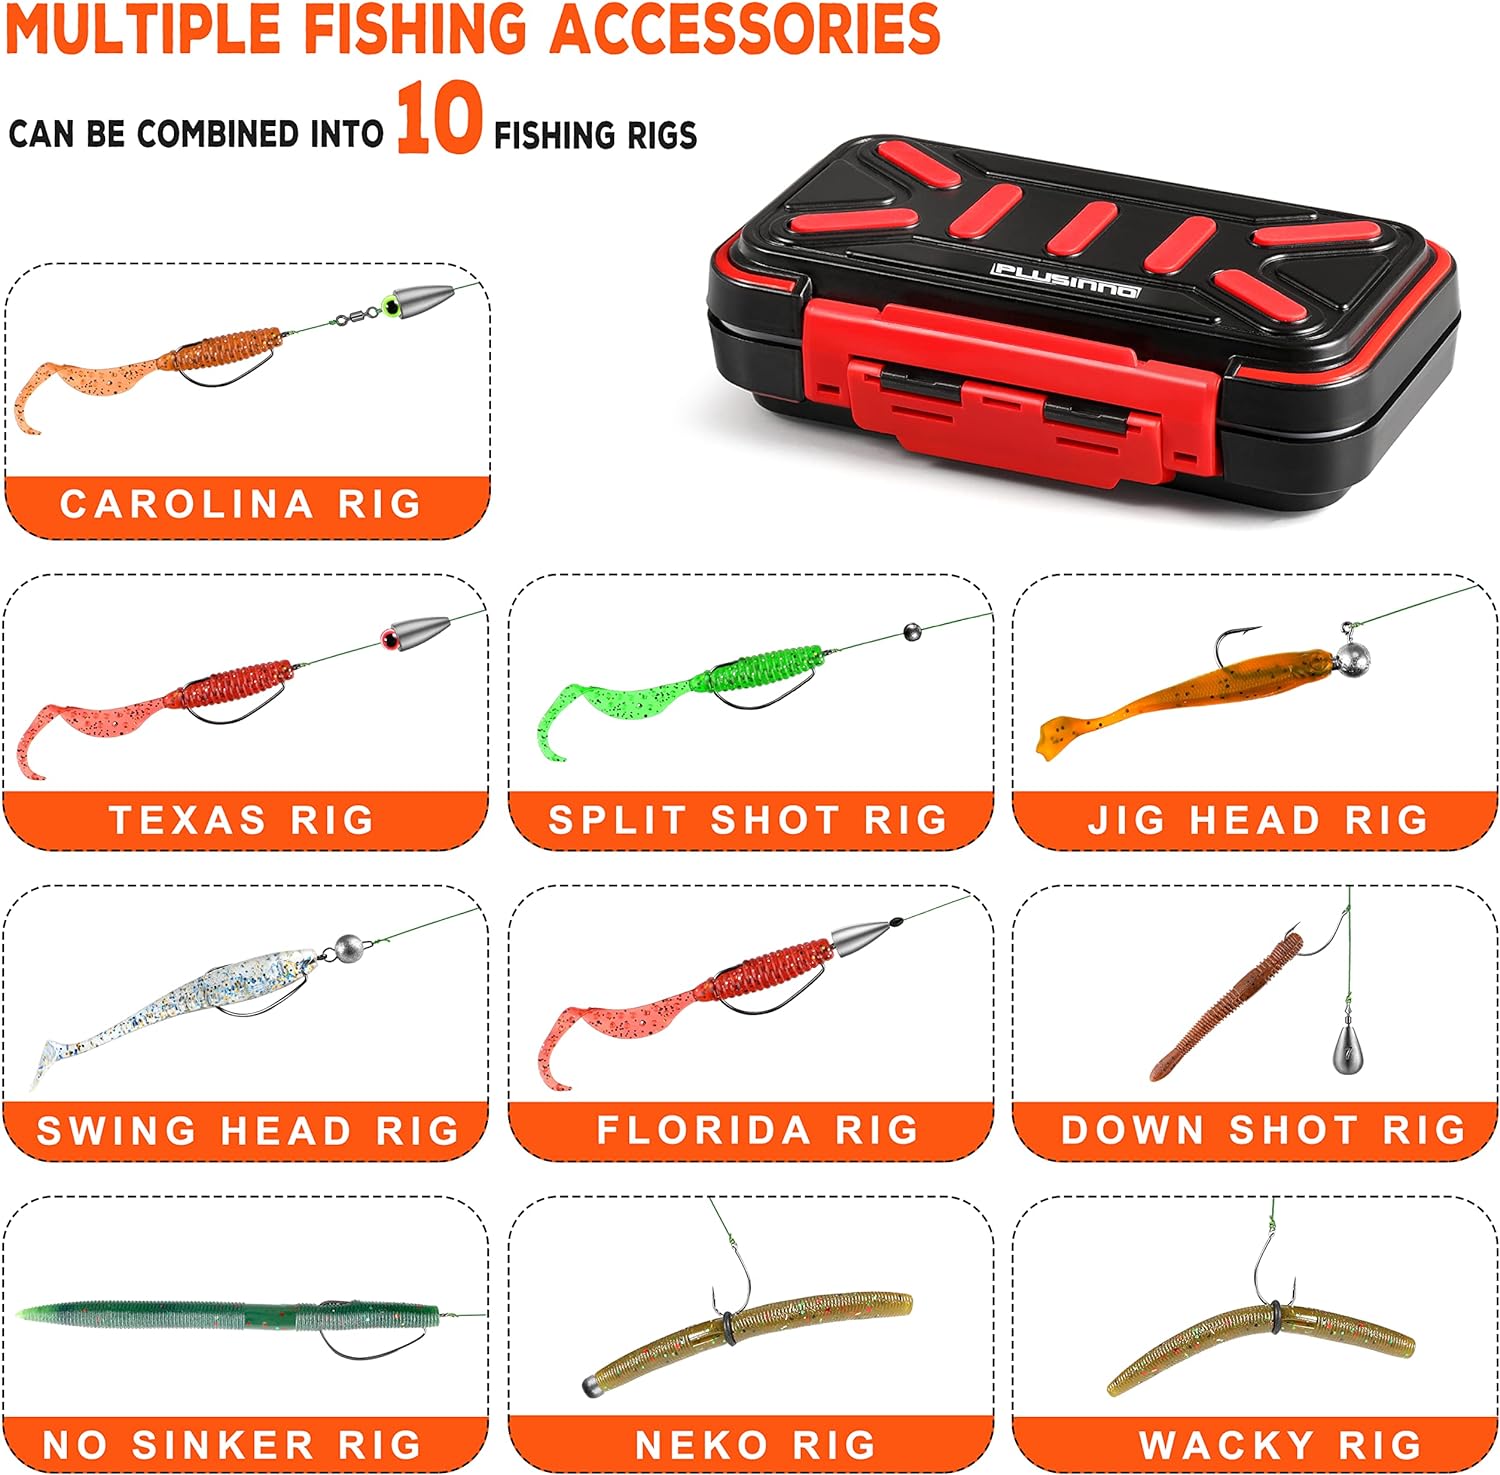 PLUSINNO 264/397pcs Fishing Accessories Kit, Organized Fishing Tackle Box with Tackle Included, Fishing Hooks, Fishing Weights Sinkers, Swivels, Beads, Fishing Gear Set Equipment